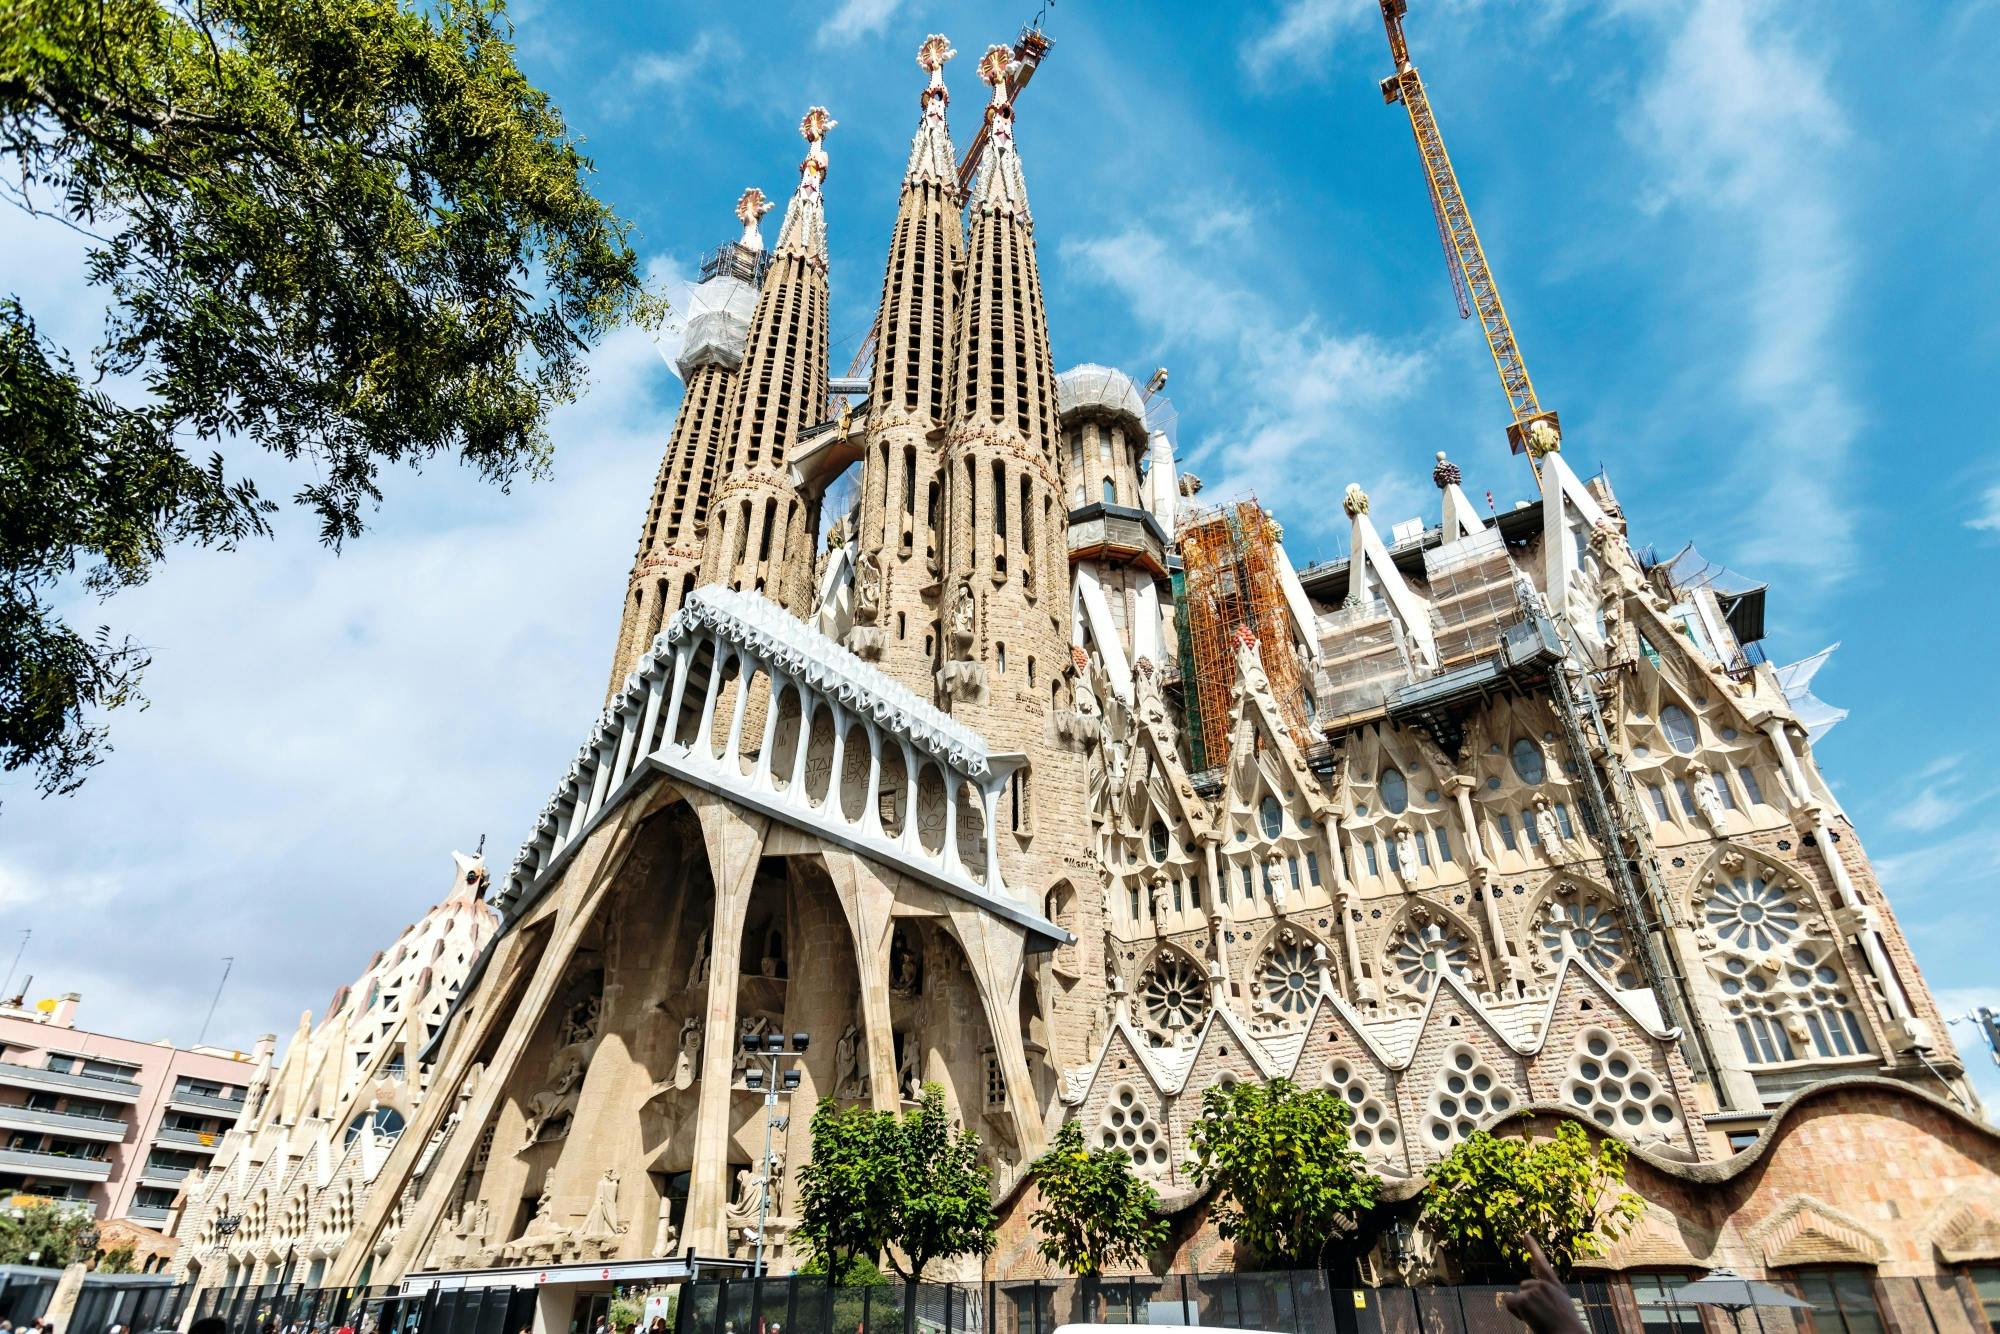 Bilhetes de entrada para a Sagrada Família